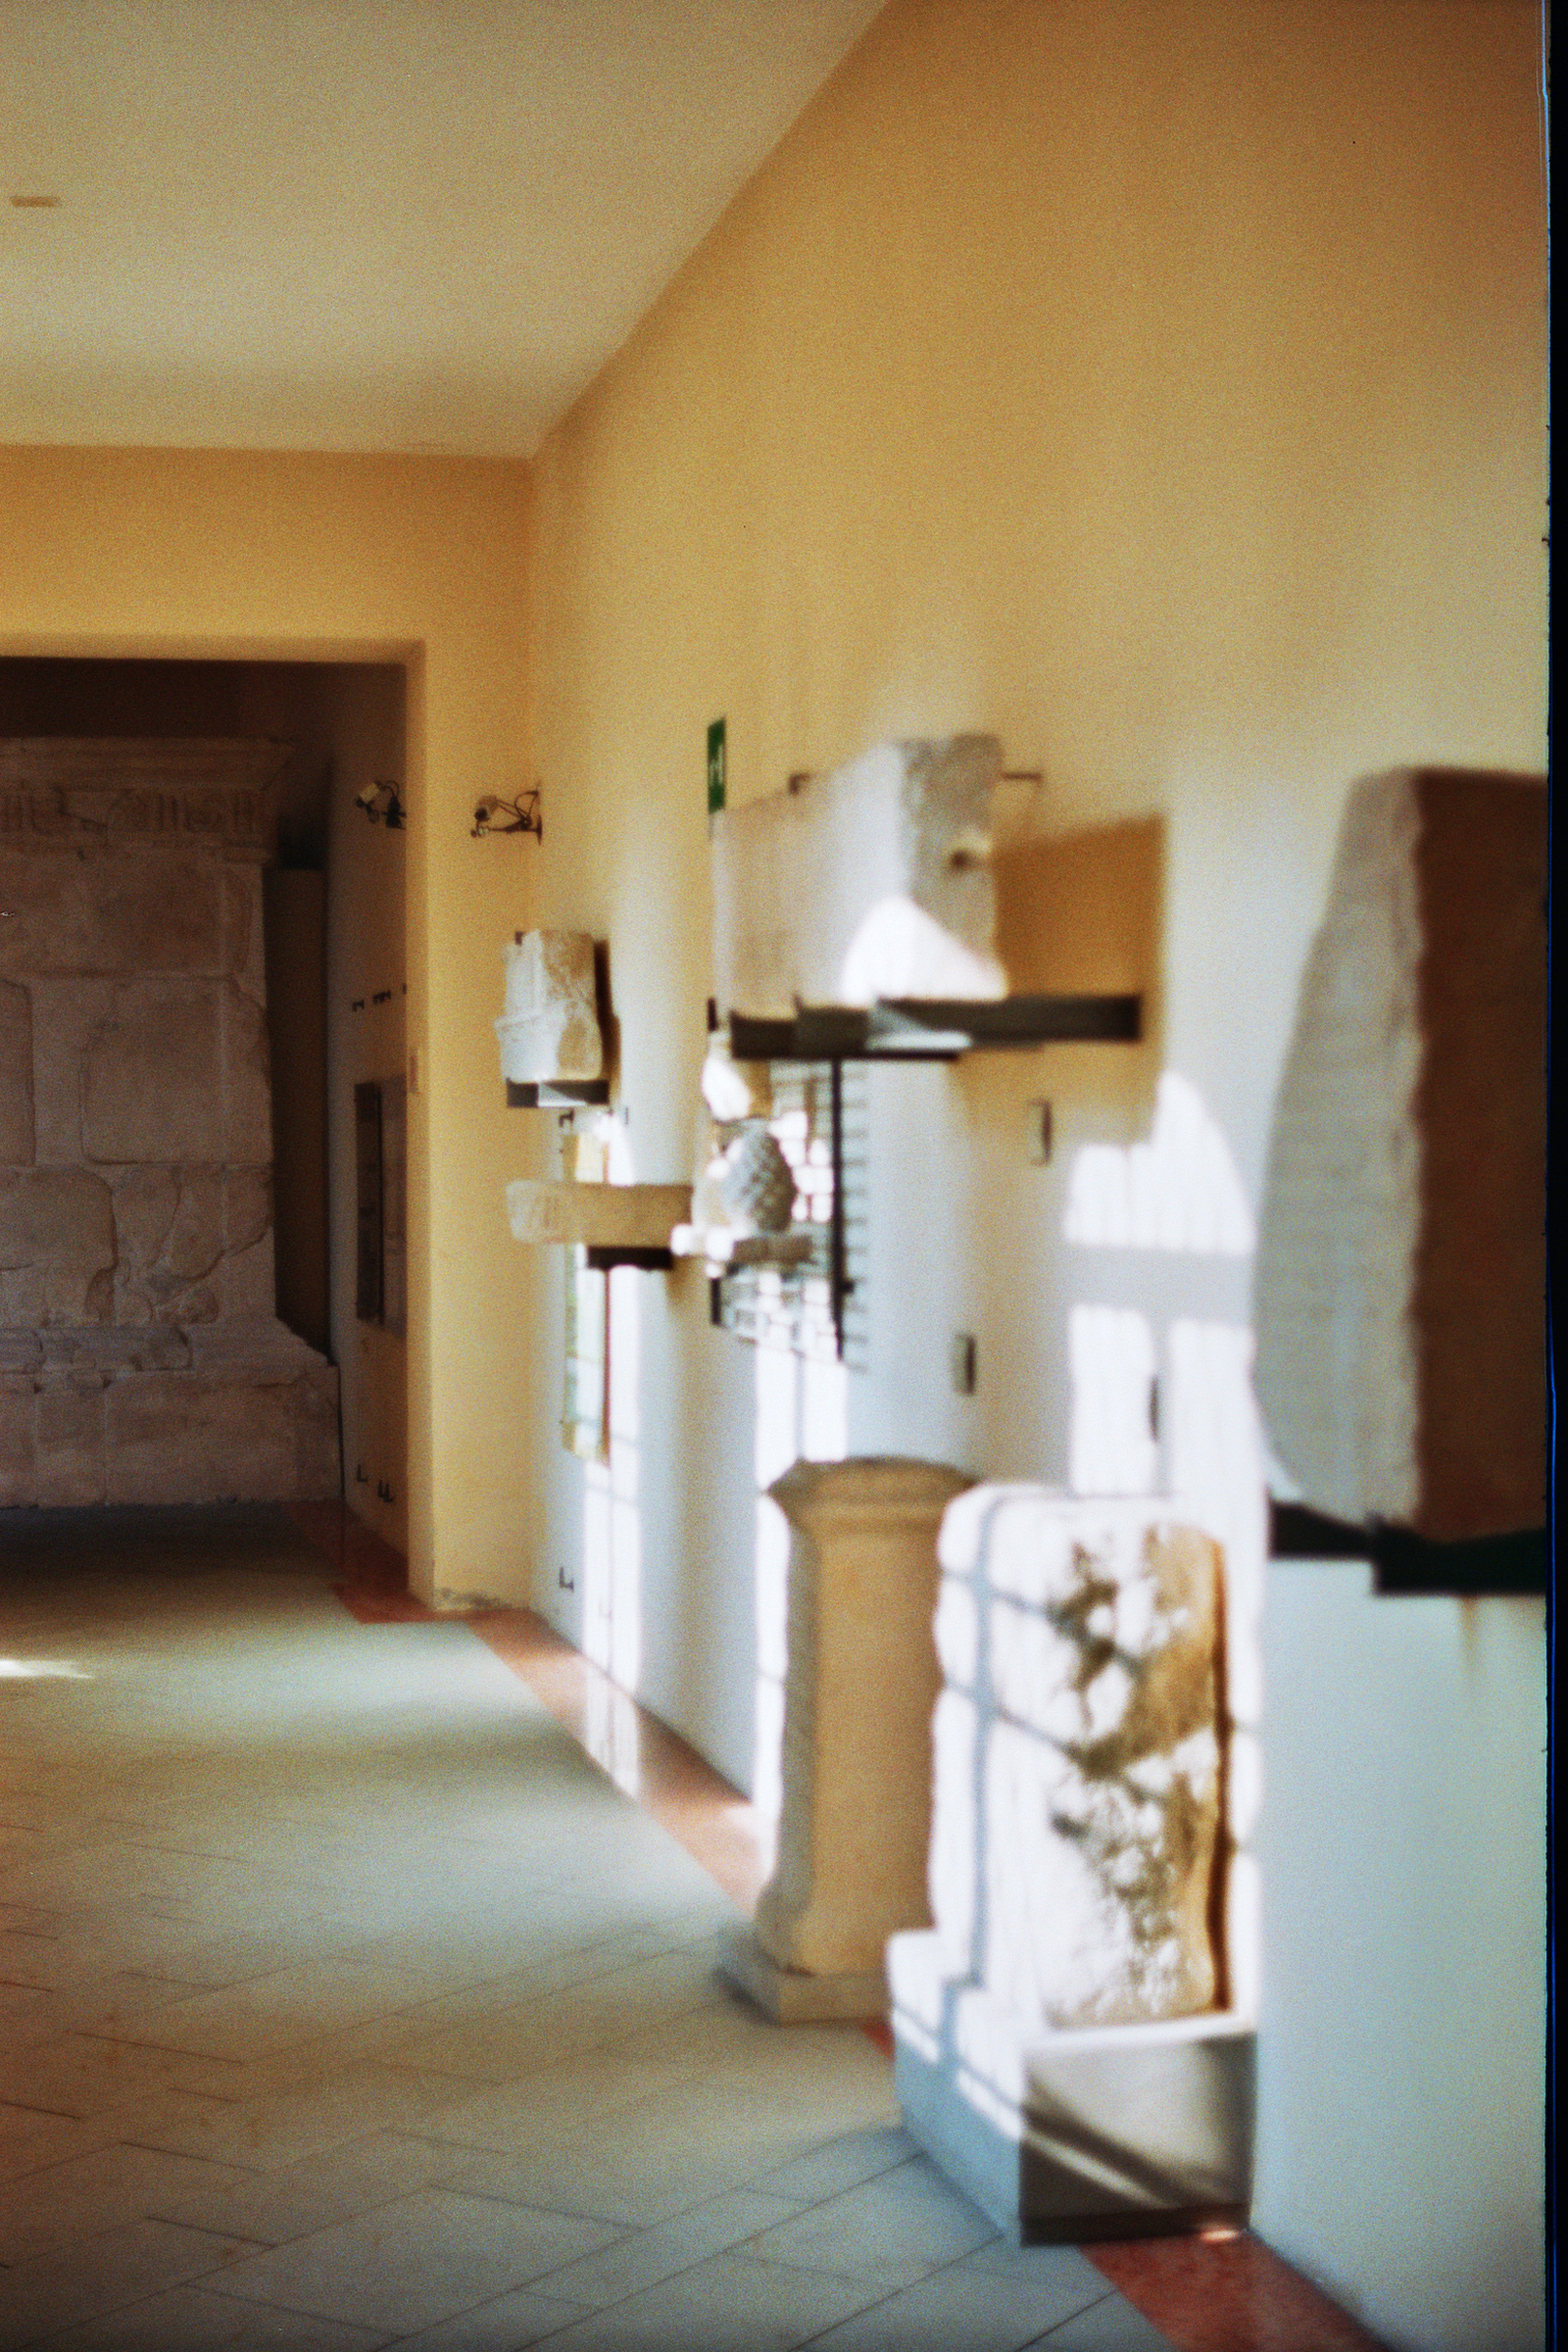 foto: https://upload.wikimedia.org/wikipedia/commons/6/67/Museo_Archeologico_Sarsinate_interno.jpg